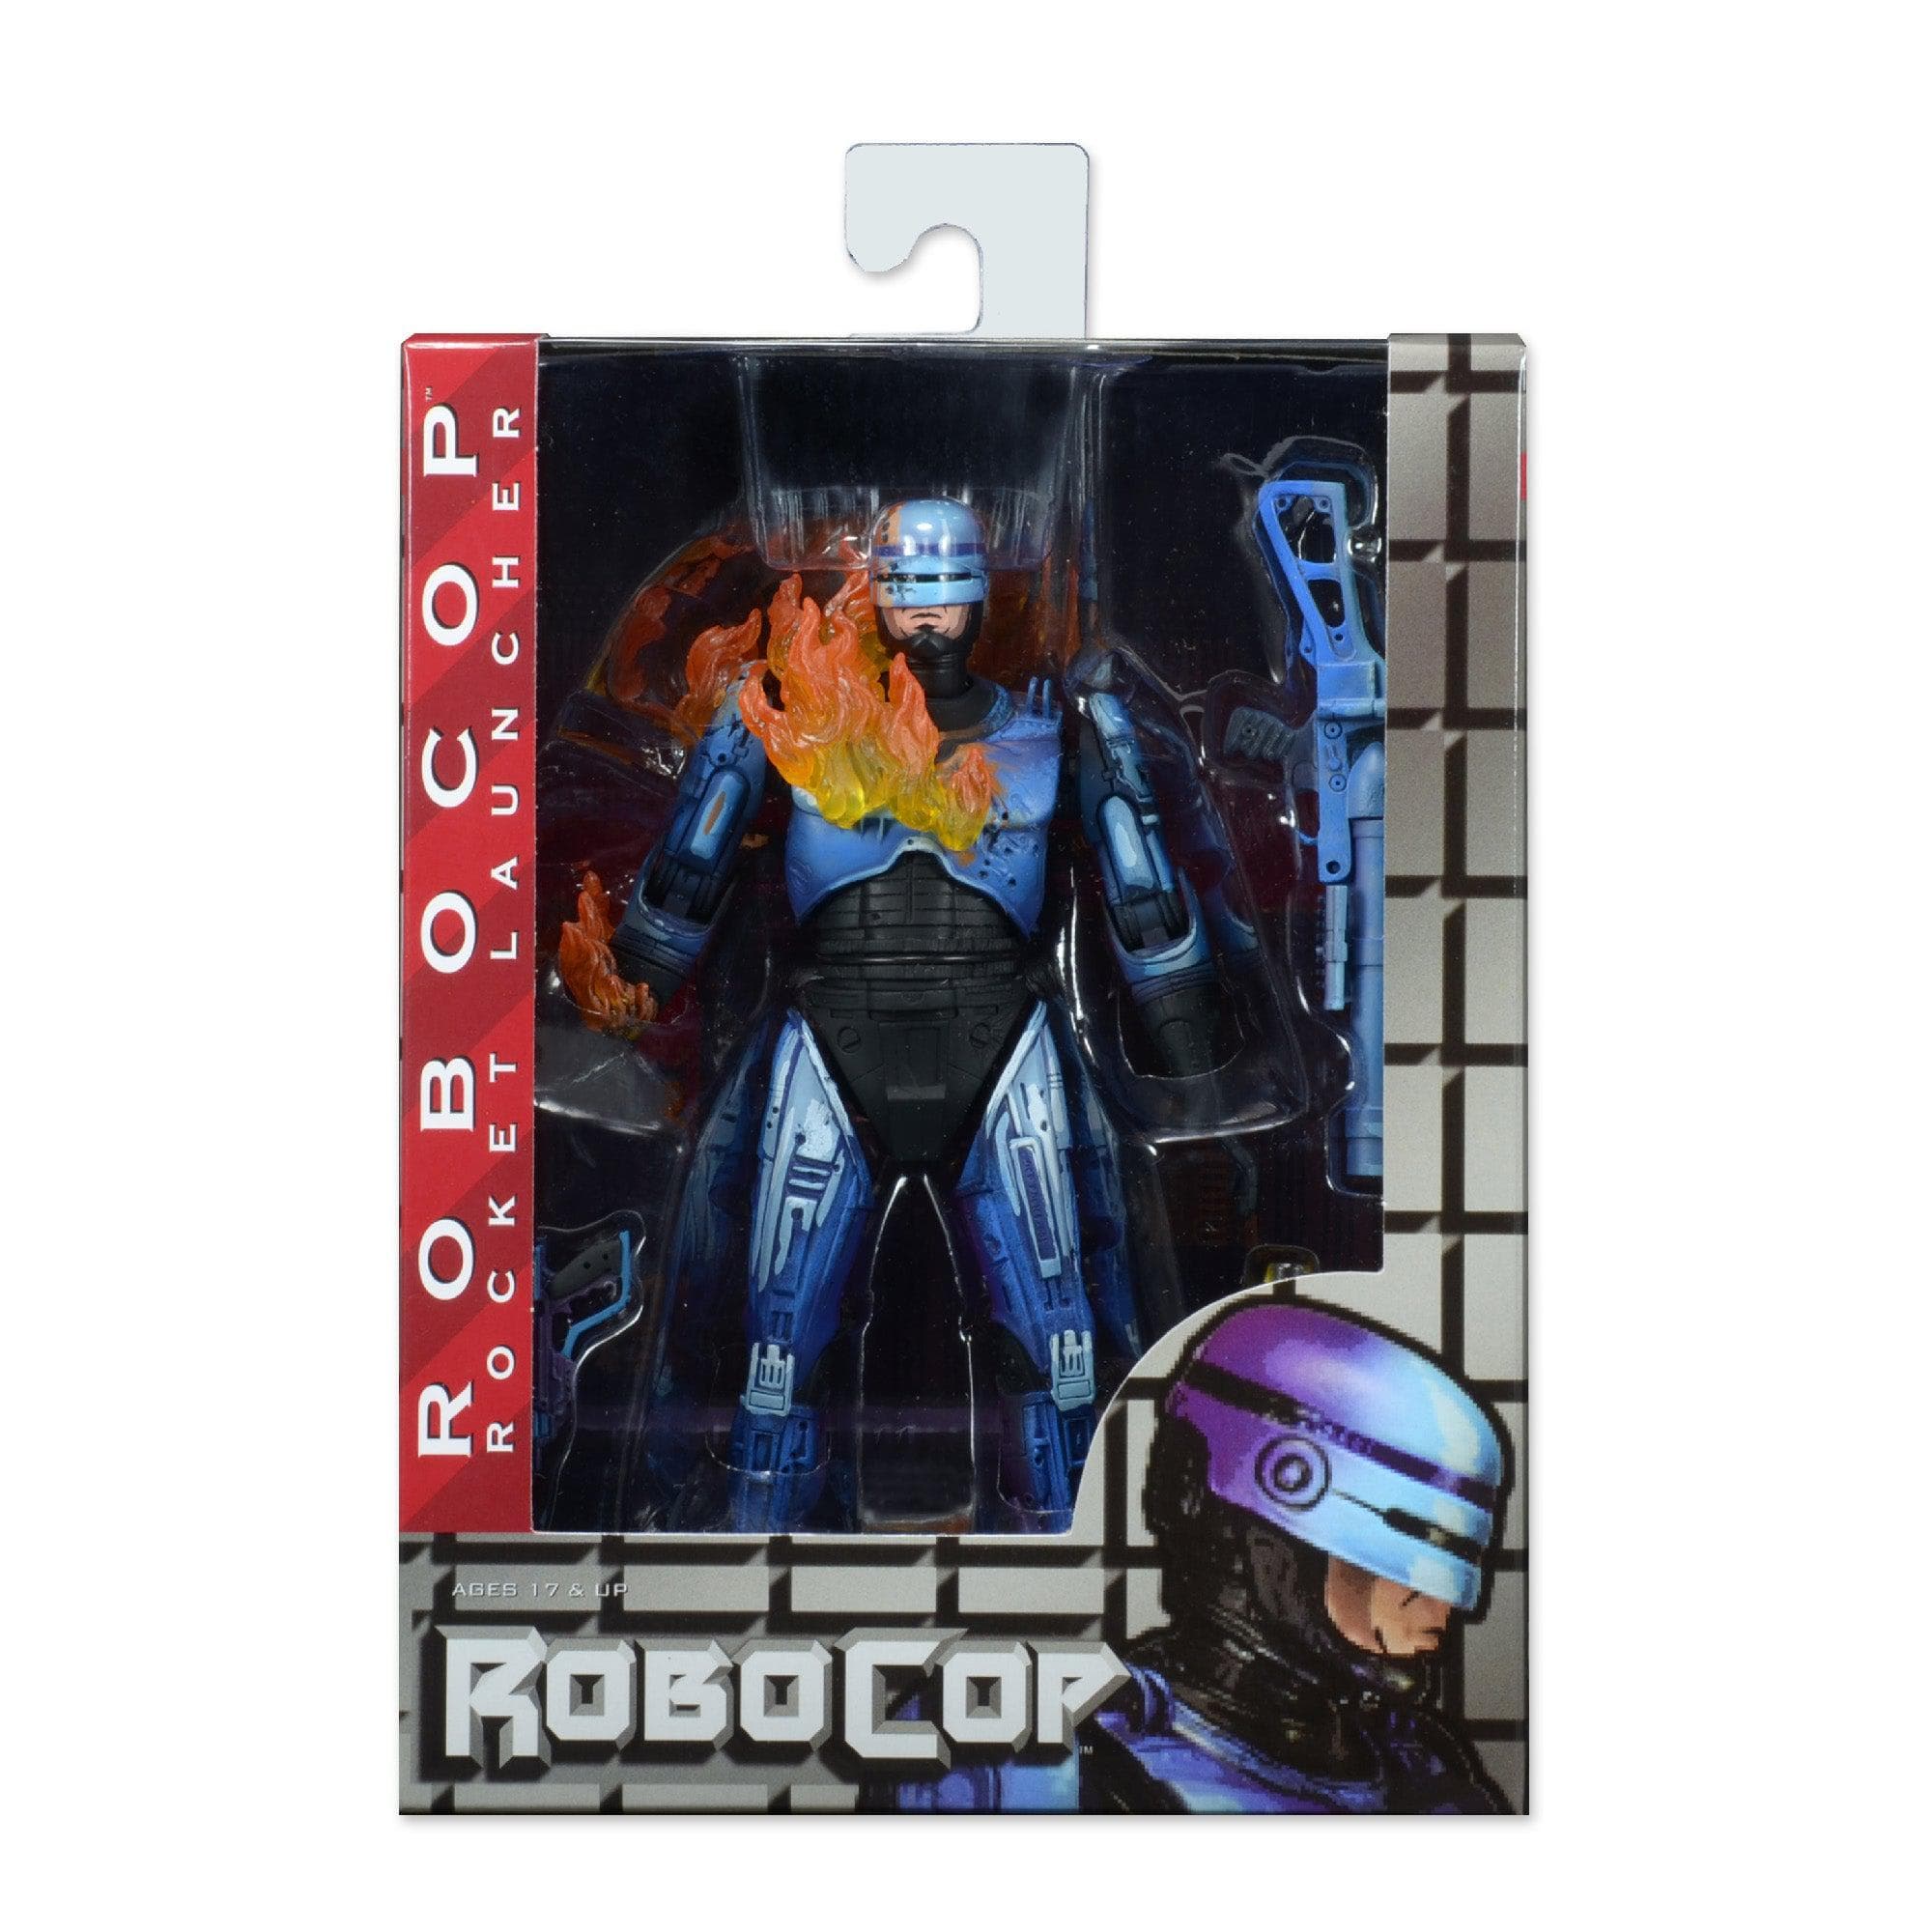 NECA - Robocop Vs Terminator (93' Video Game) - 7" Scale Action Figure - Series 2 Robocop Battle Damaged - costumes.com